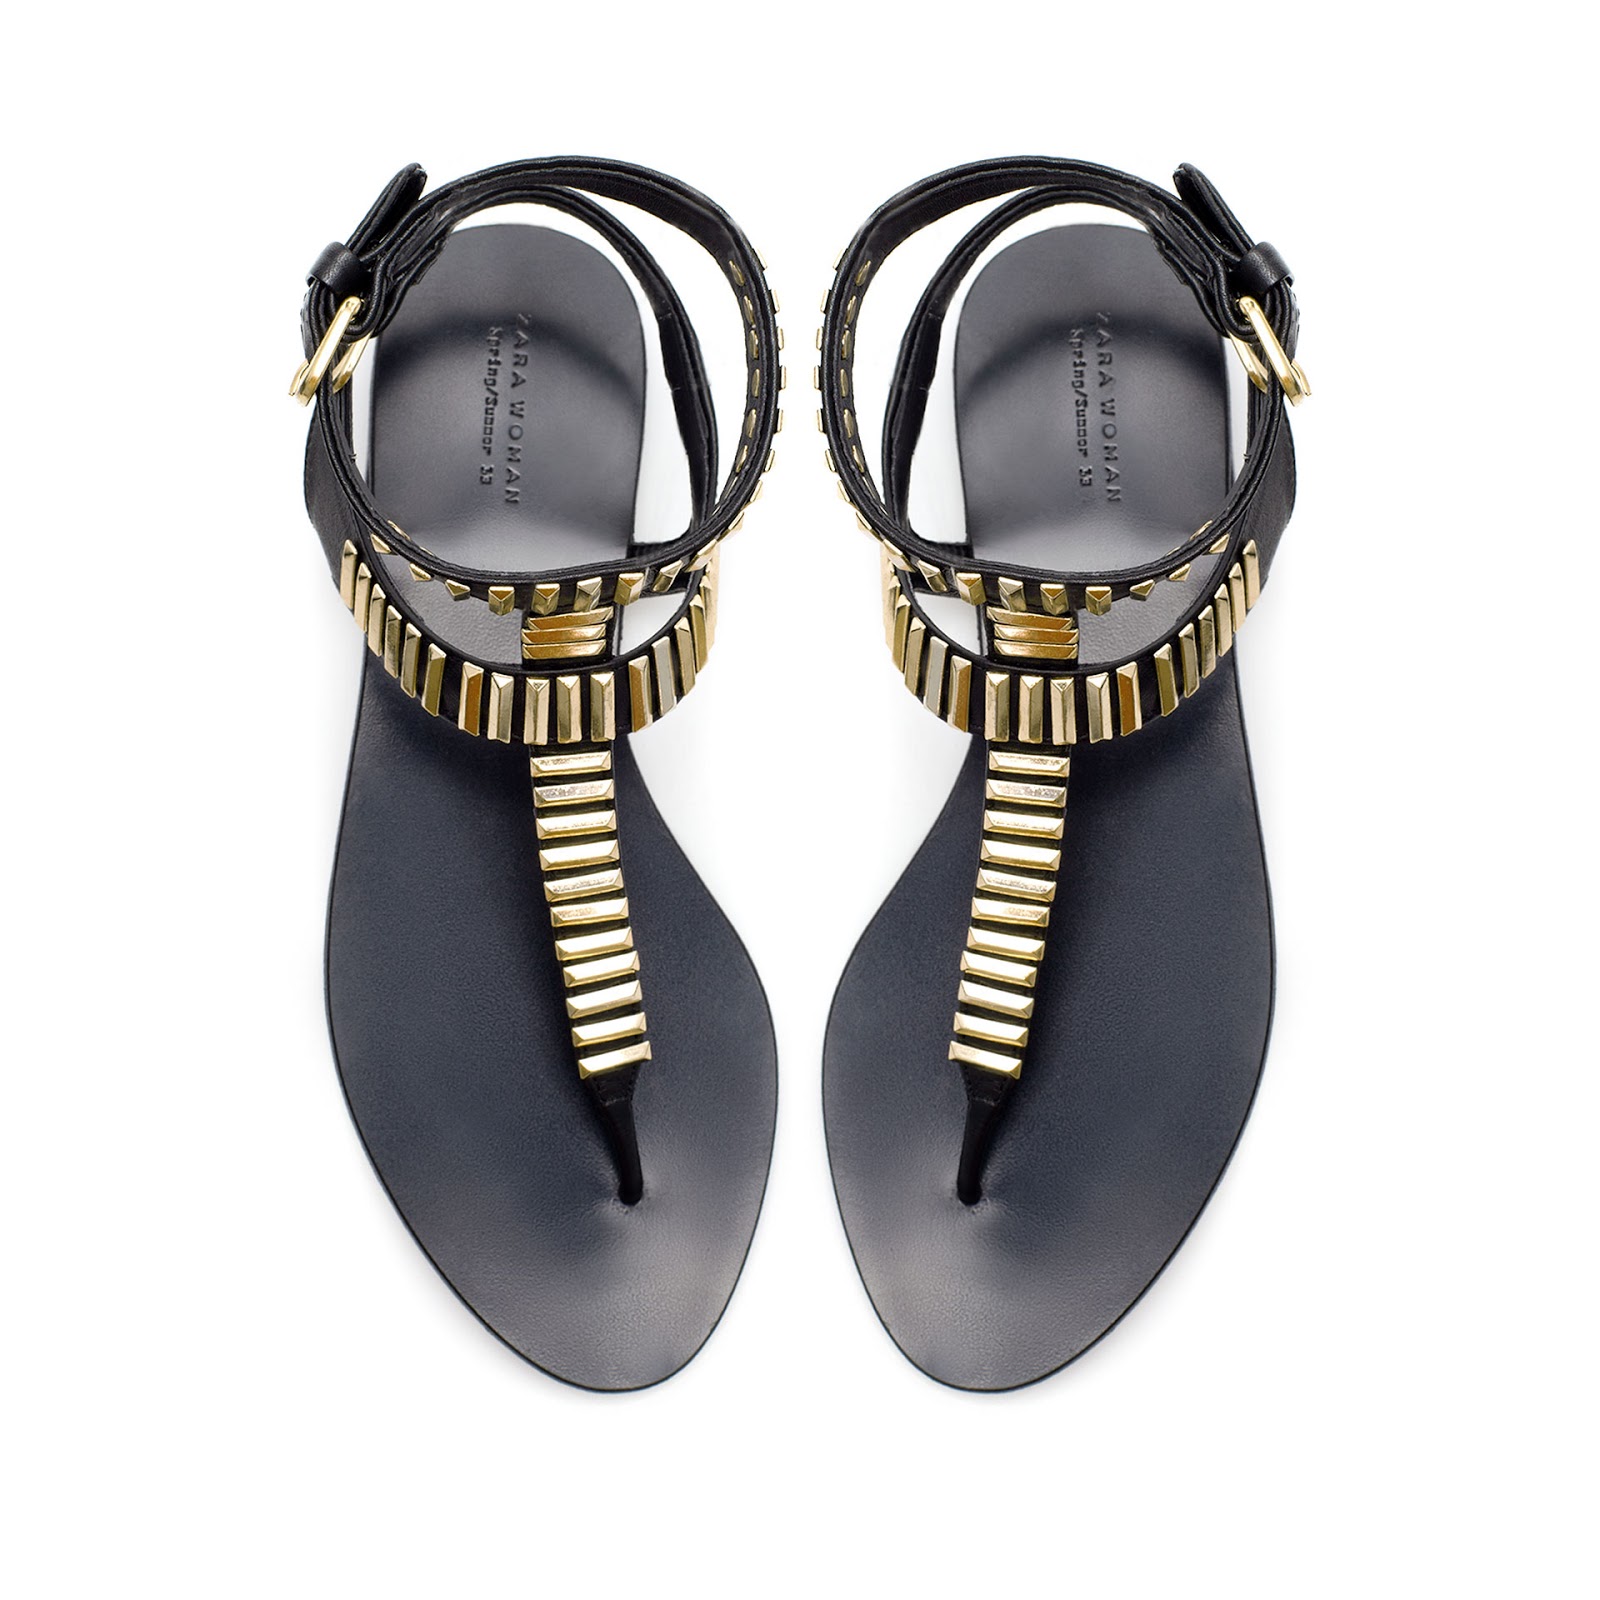 Zara Black Sandal with Metallic Detail Â£59.99